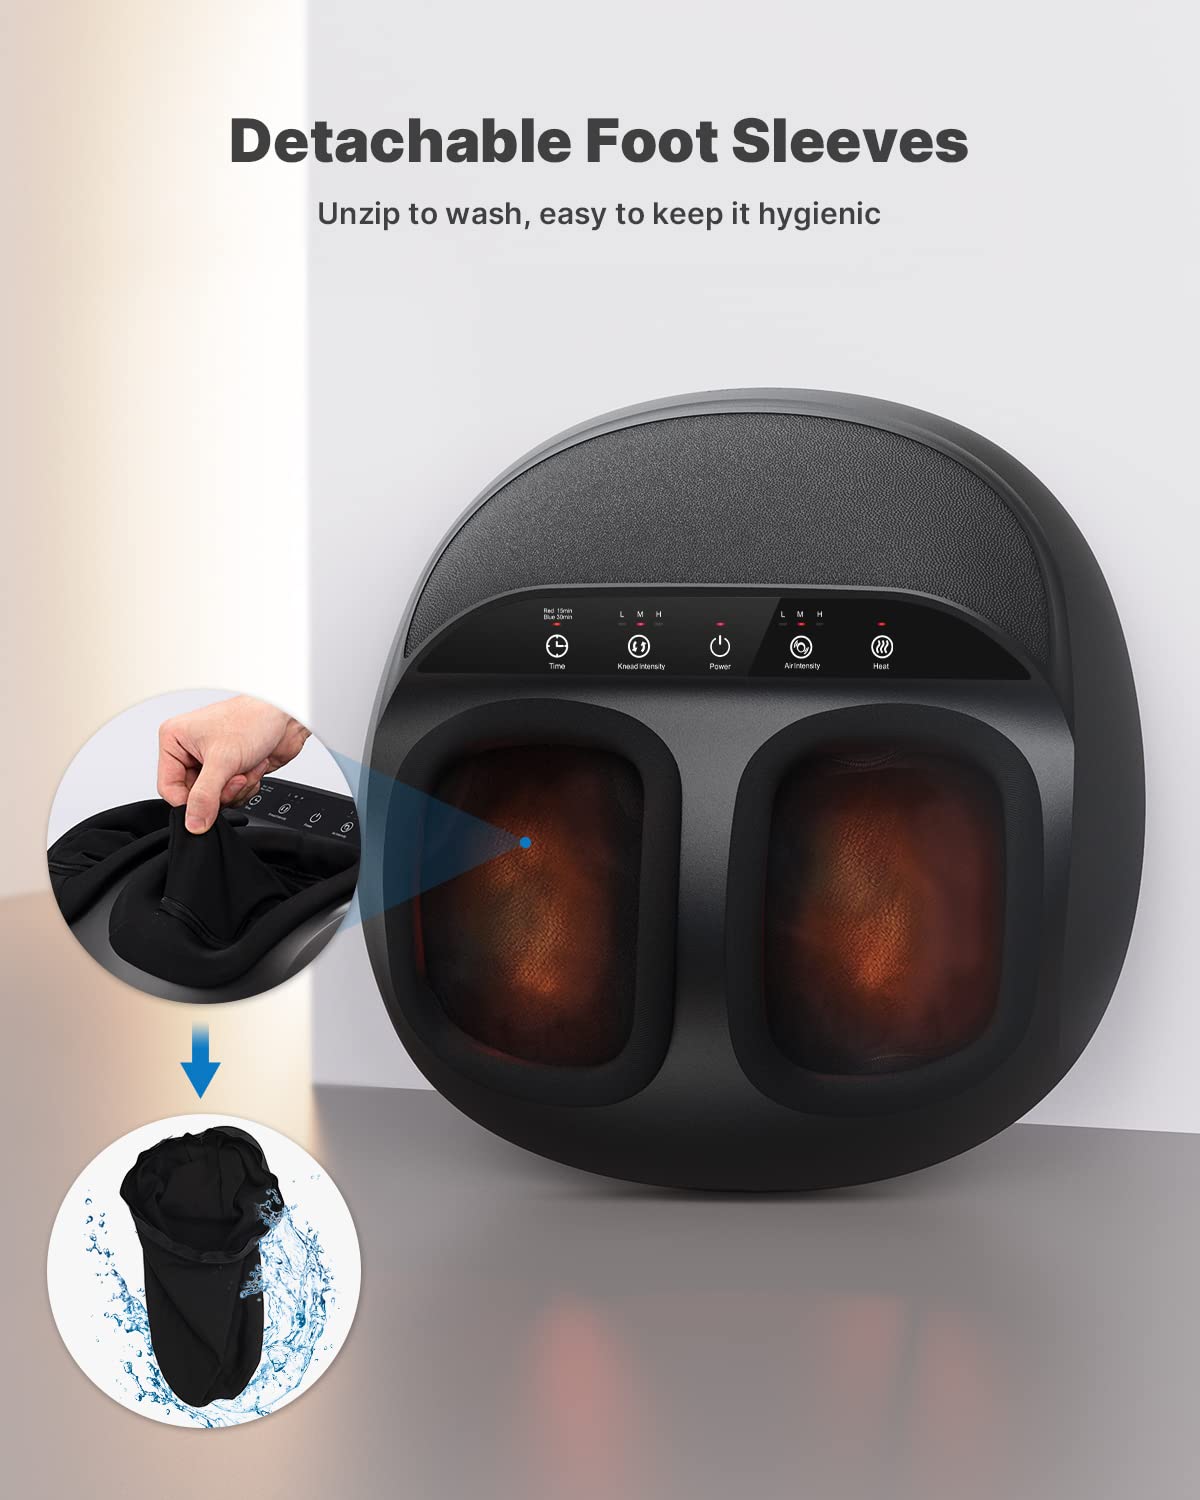 RENPHO Shiatsu Foot Massager Machine with Heat, Deep Kneading Therapy Improve Foot Wellness- Black - image 3 of 9